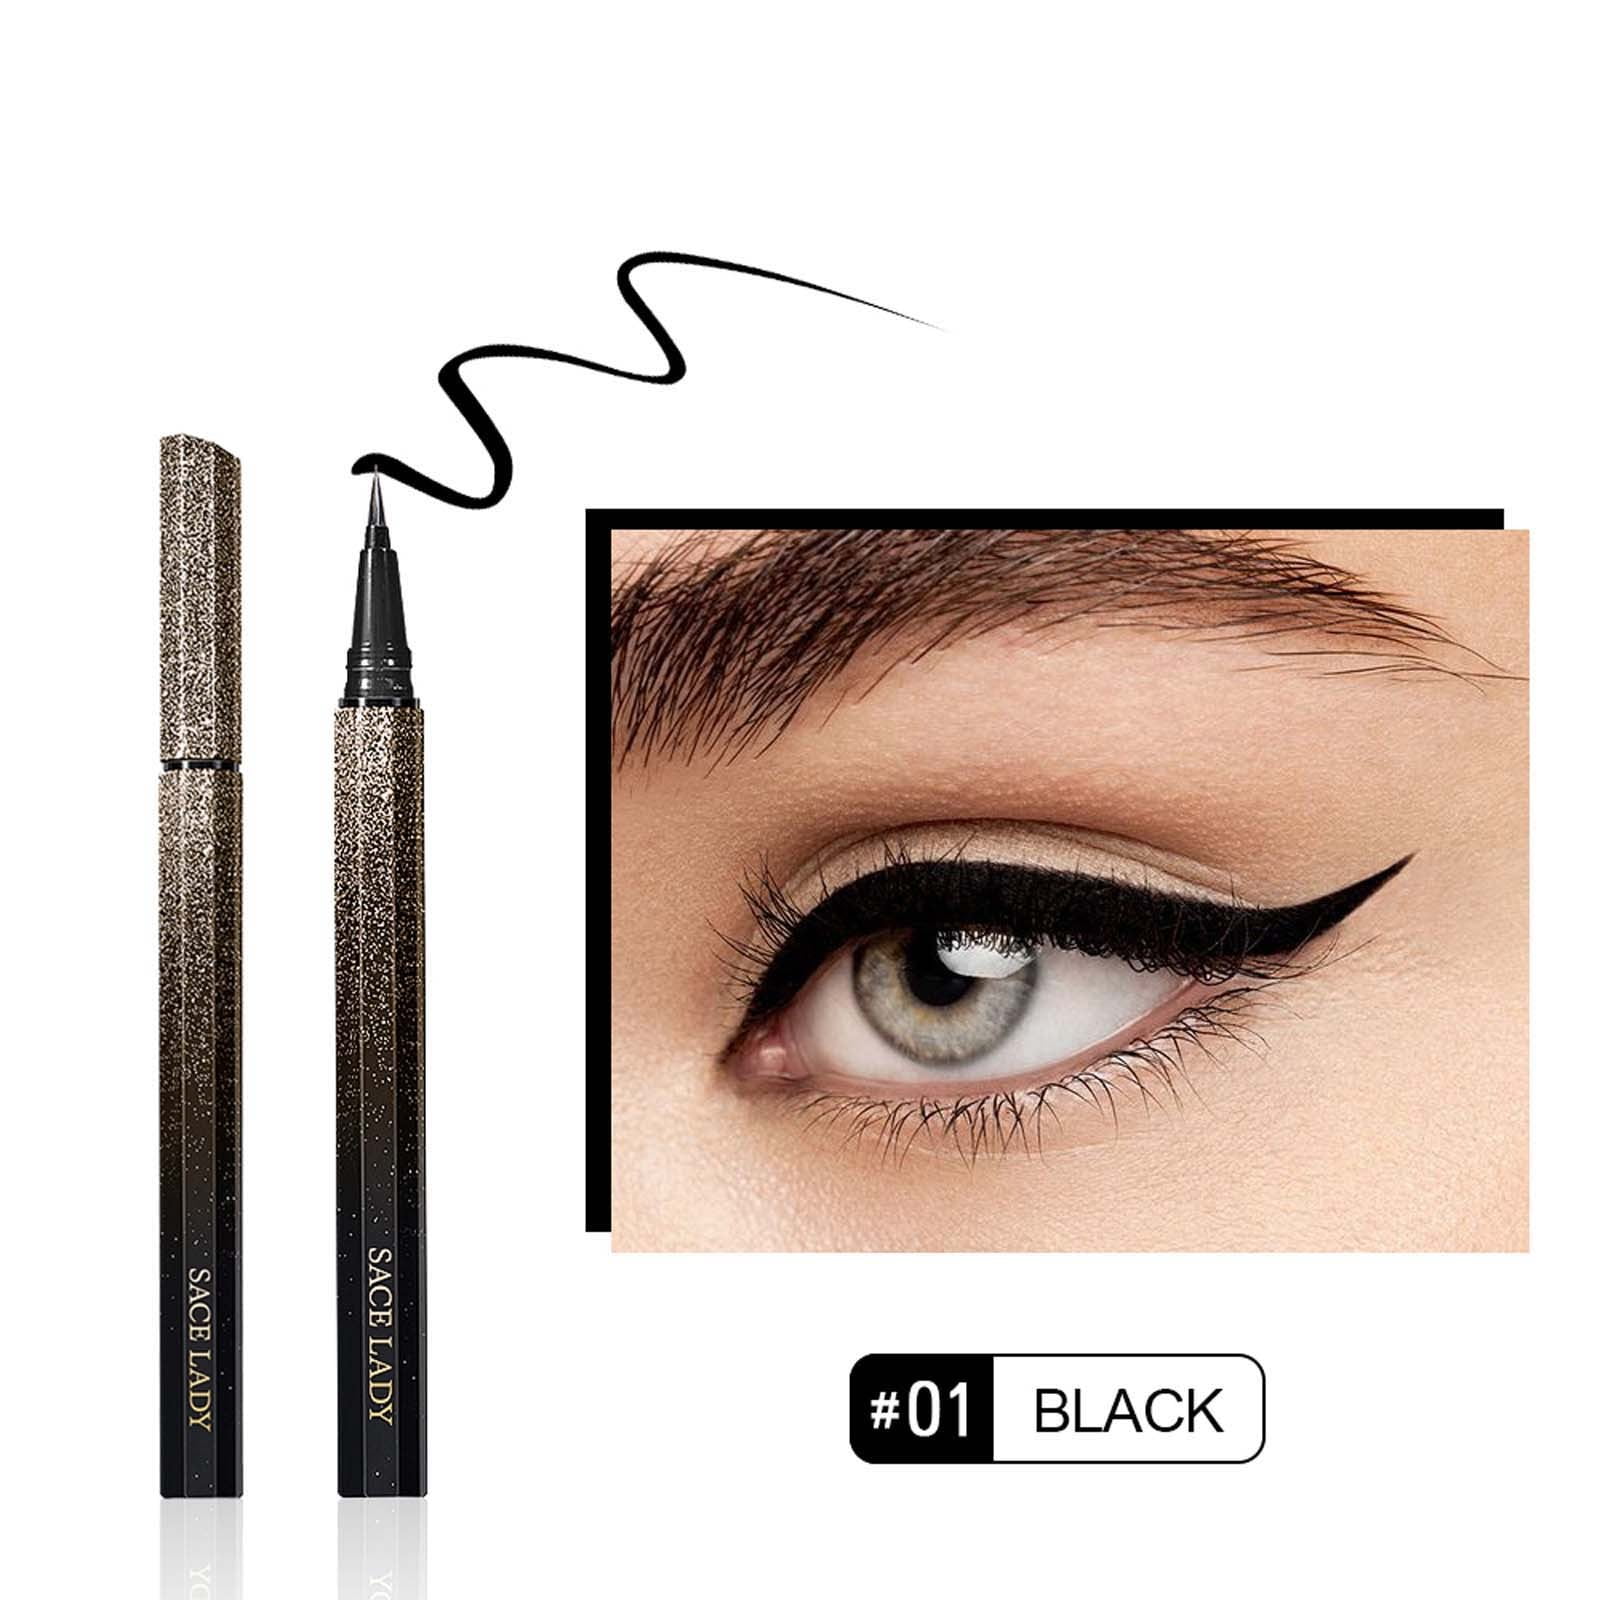 New Eyeliner Waterproof Liquid Eye Liner Pencil Pen Make Up Beauty - Walmart.com